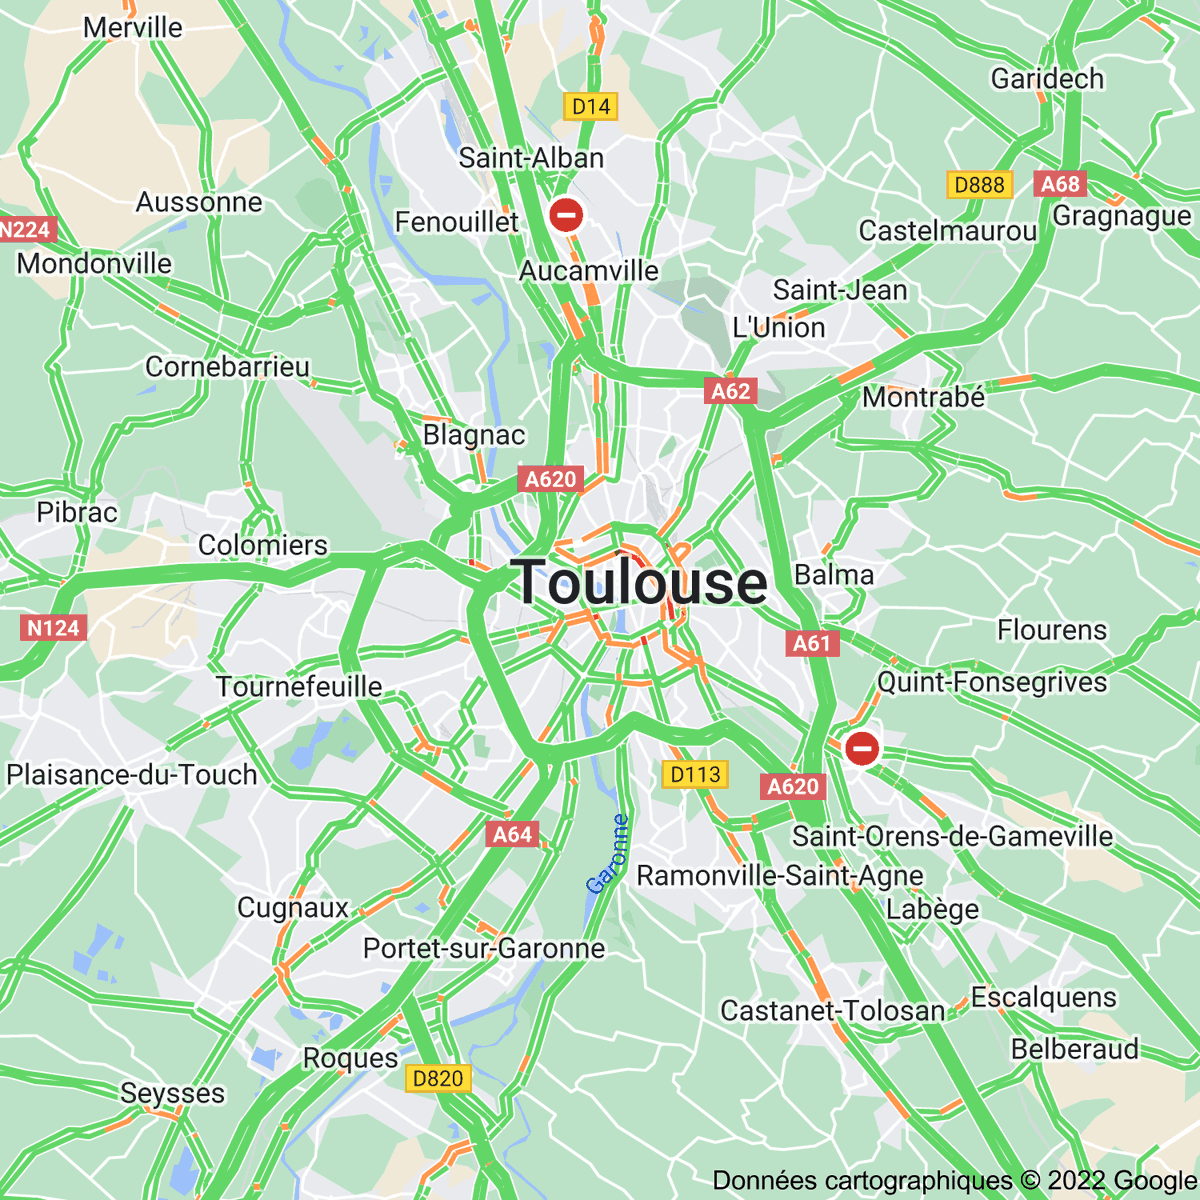 [FLASH 10:30] Trafic à Toulouse toulousetrafic.com #Toulouse #ToulousePeriph #InfoTrafic